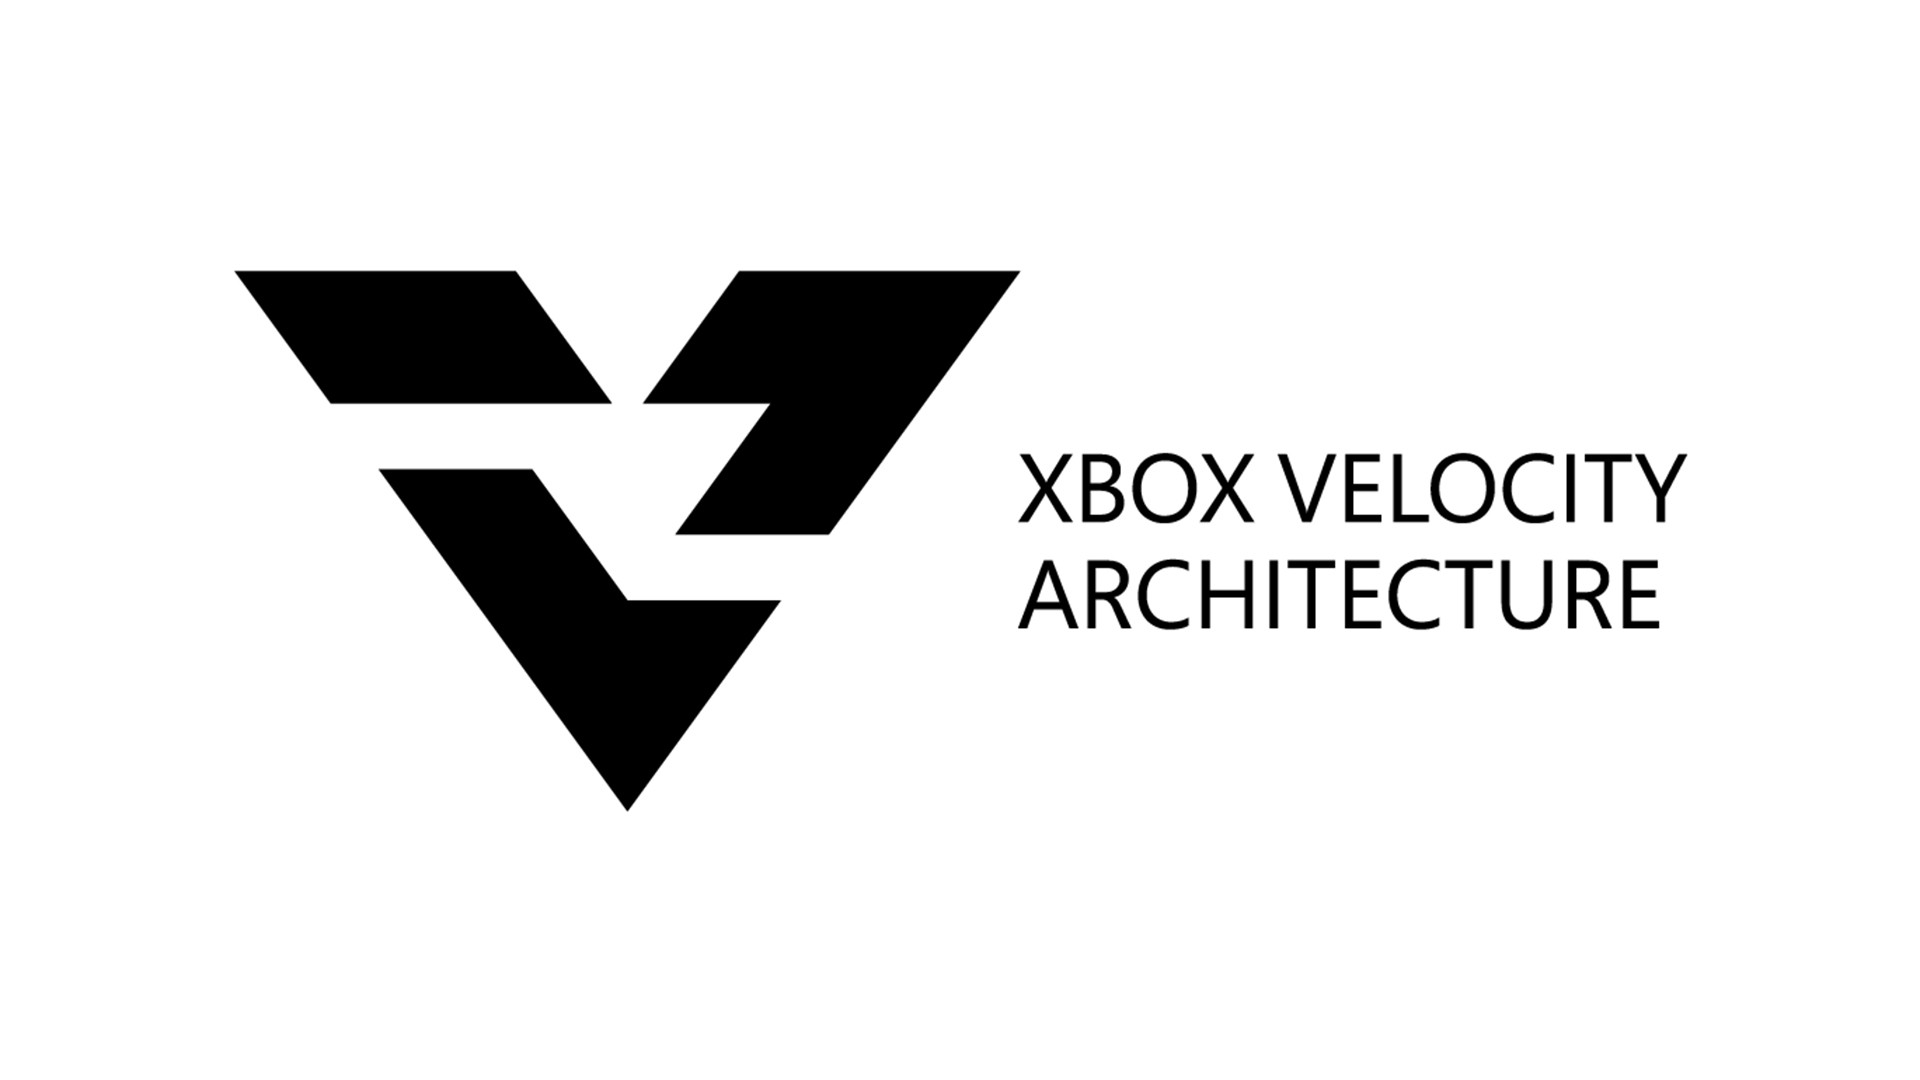 Xbox Velocity Architecture logo